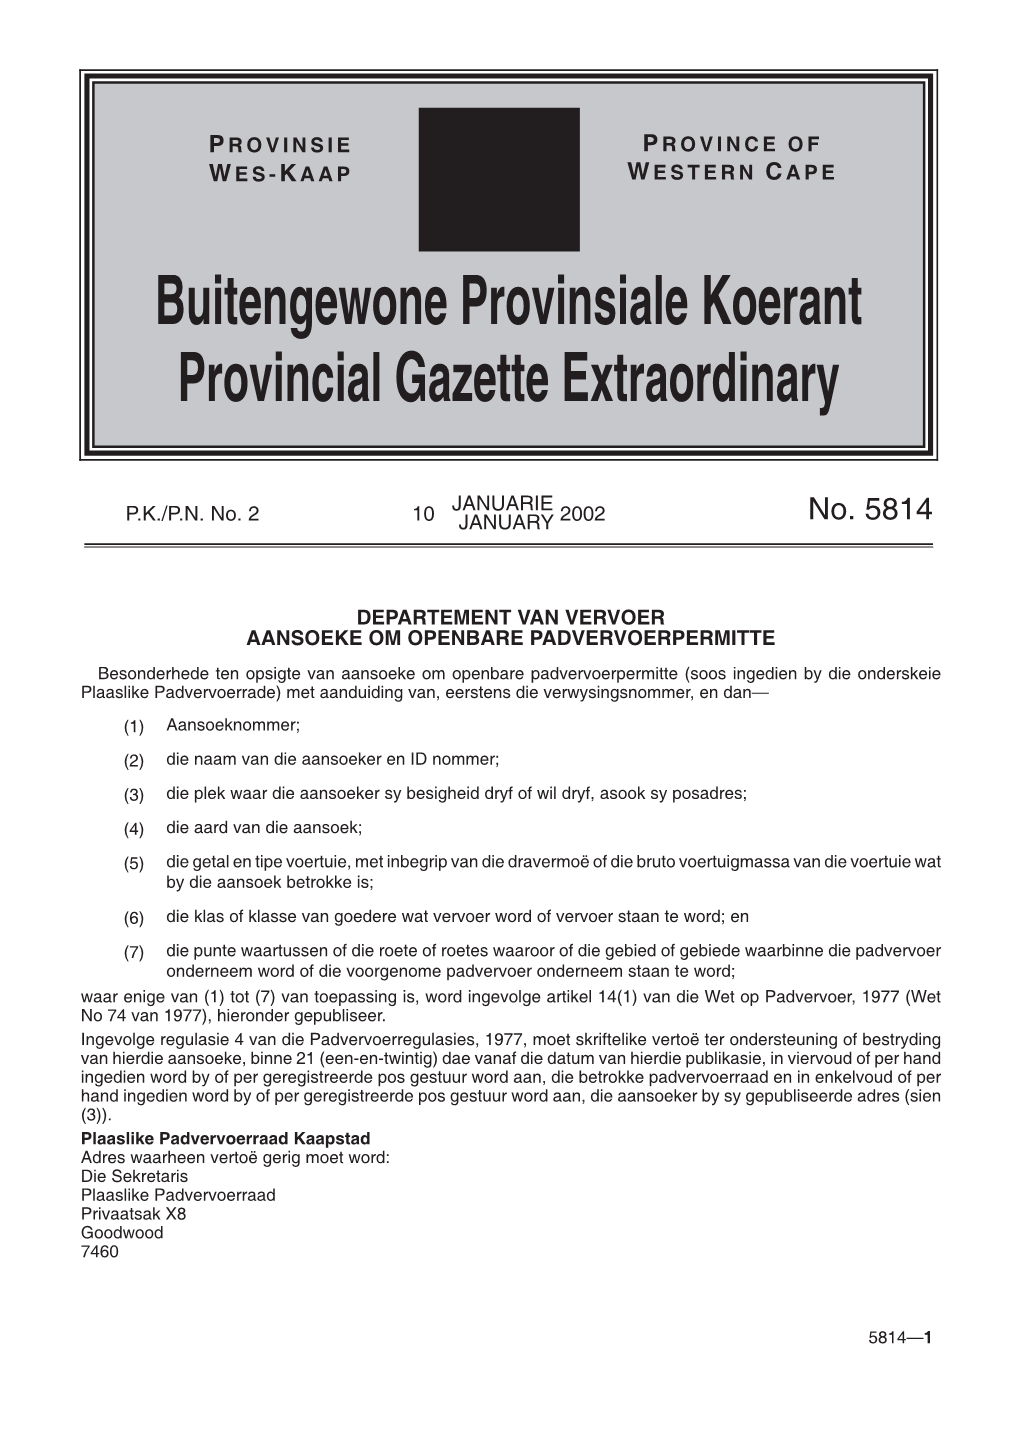 Buitengewone Provinsiale Koerant Provincial Gazette Extraordinary